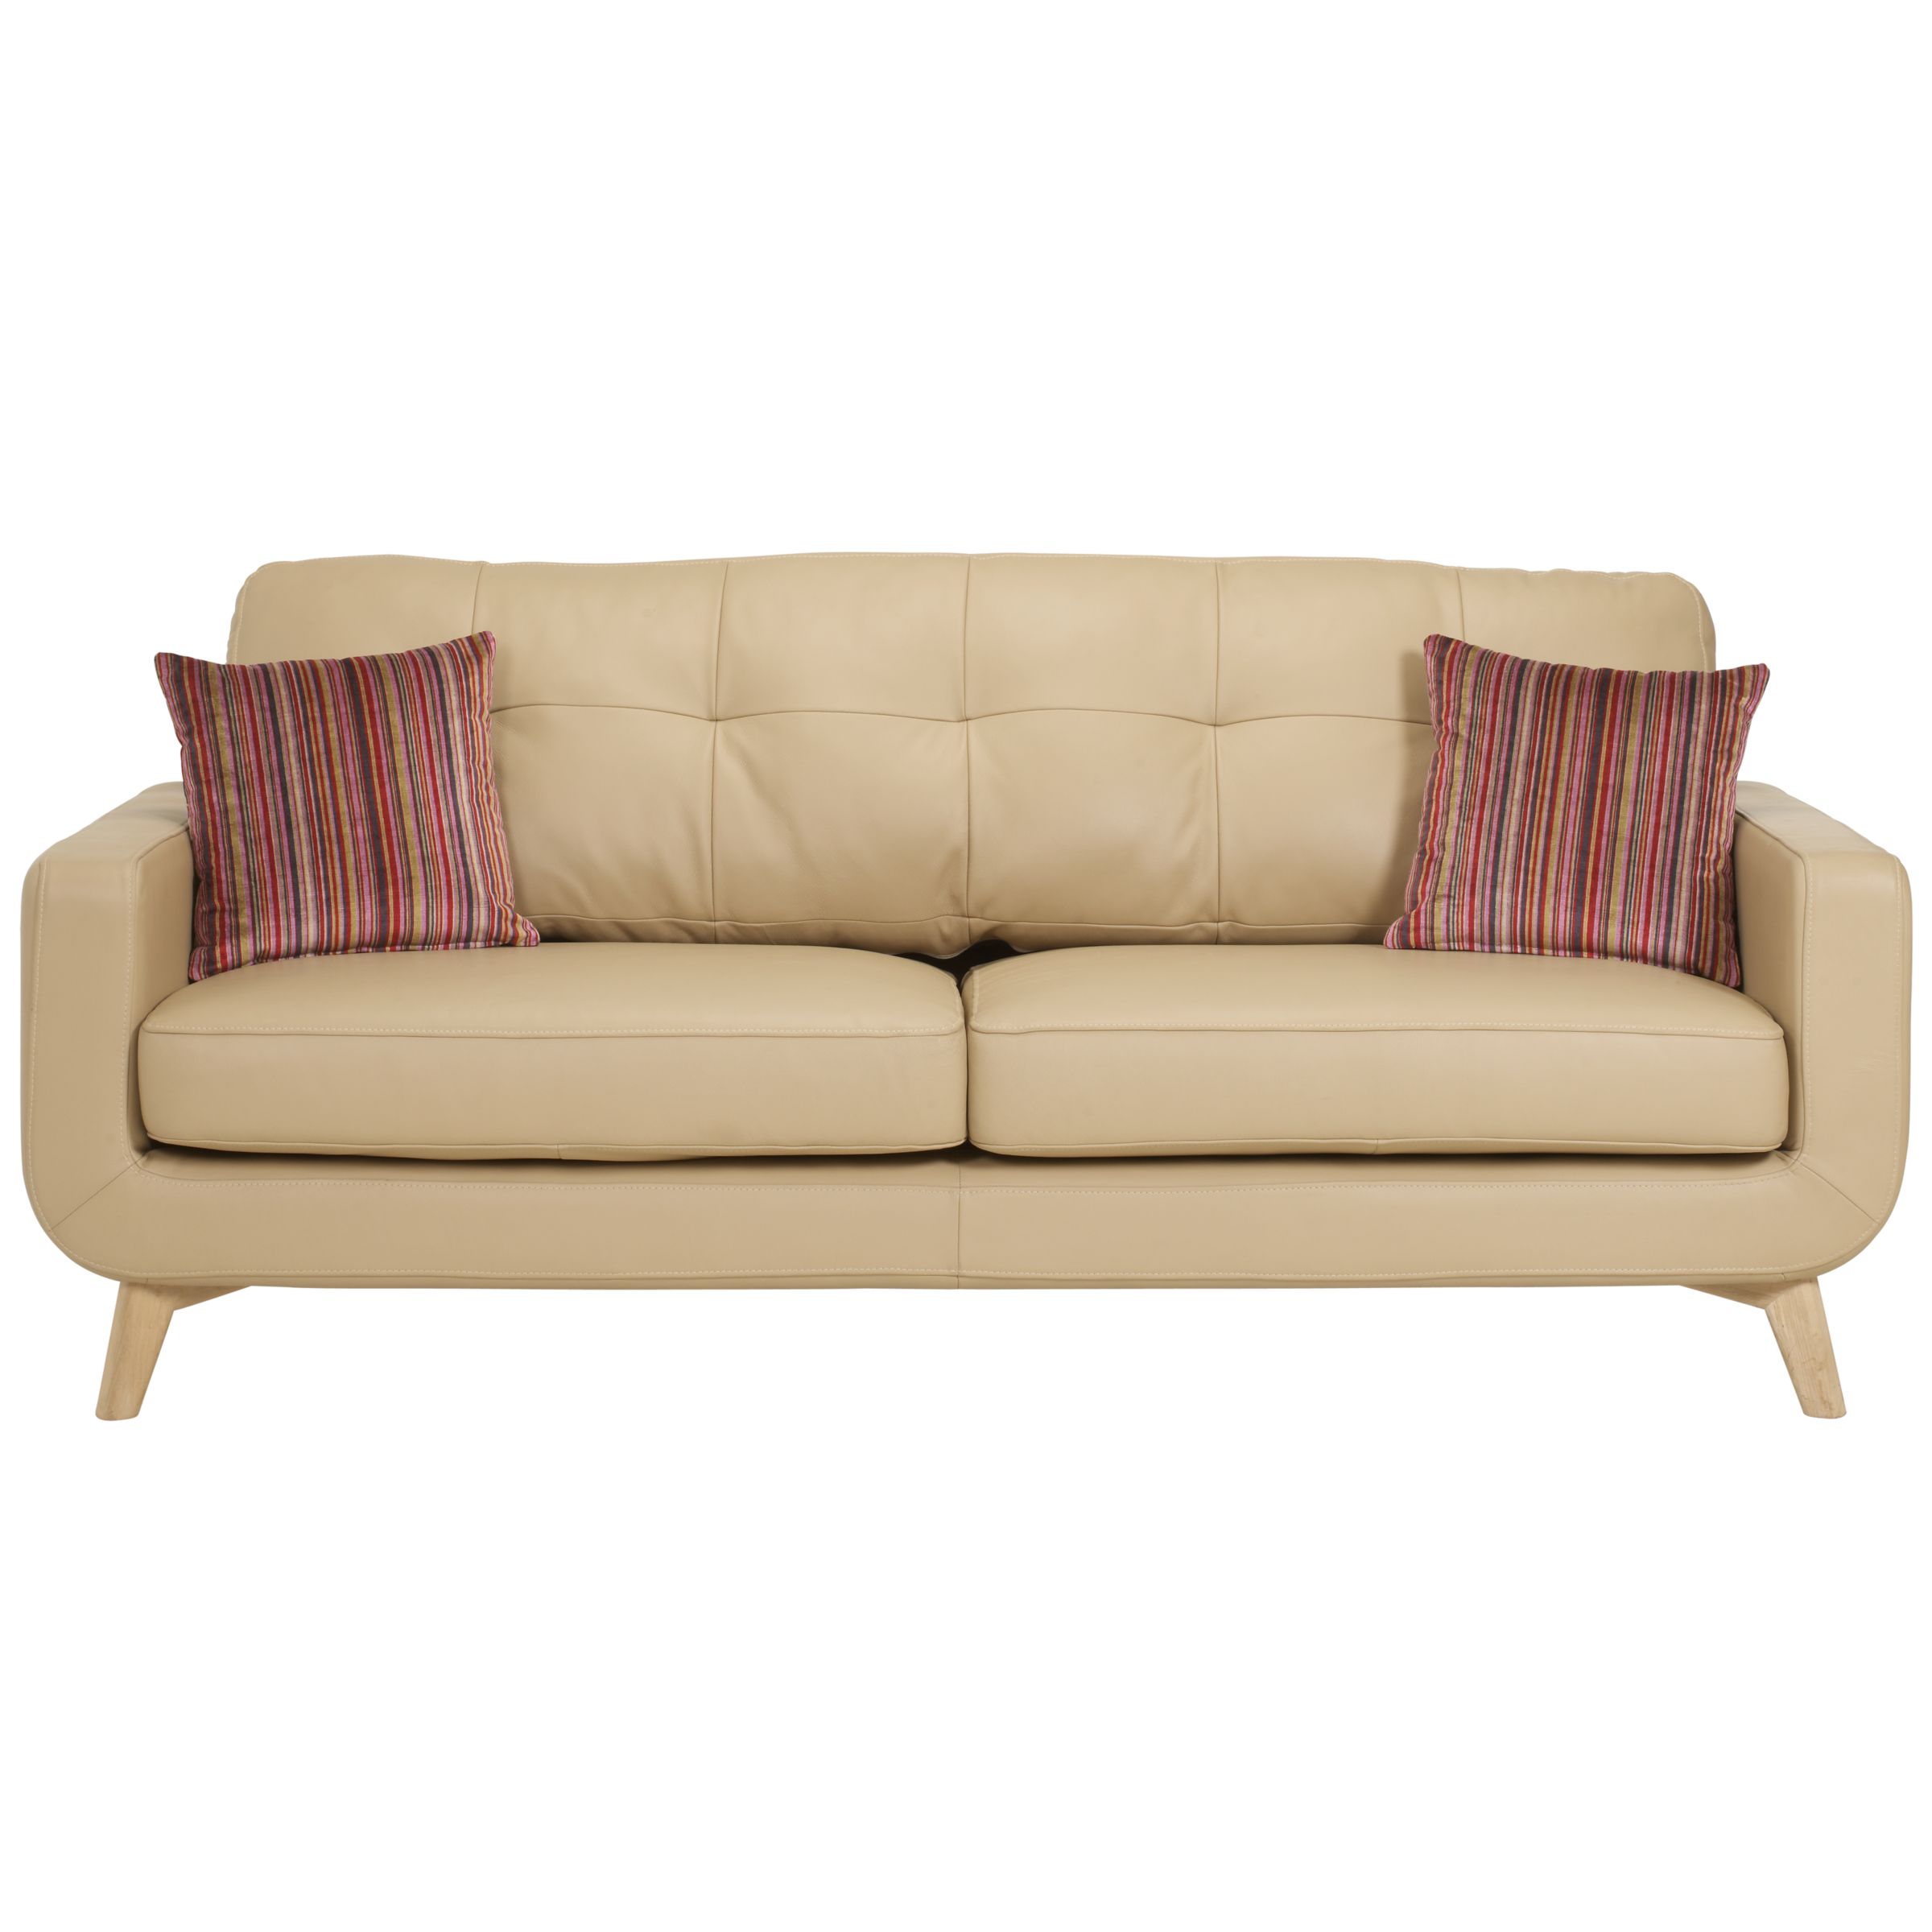 Barbican Large Leather Sofa, Prescott